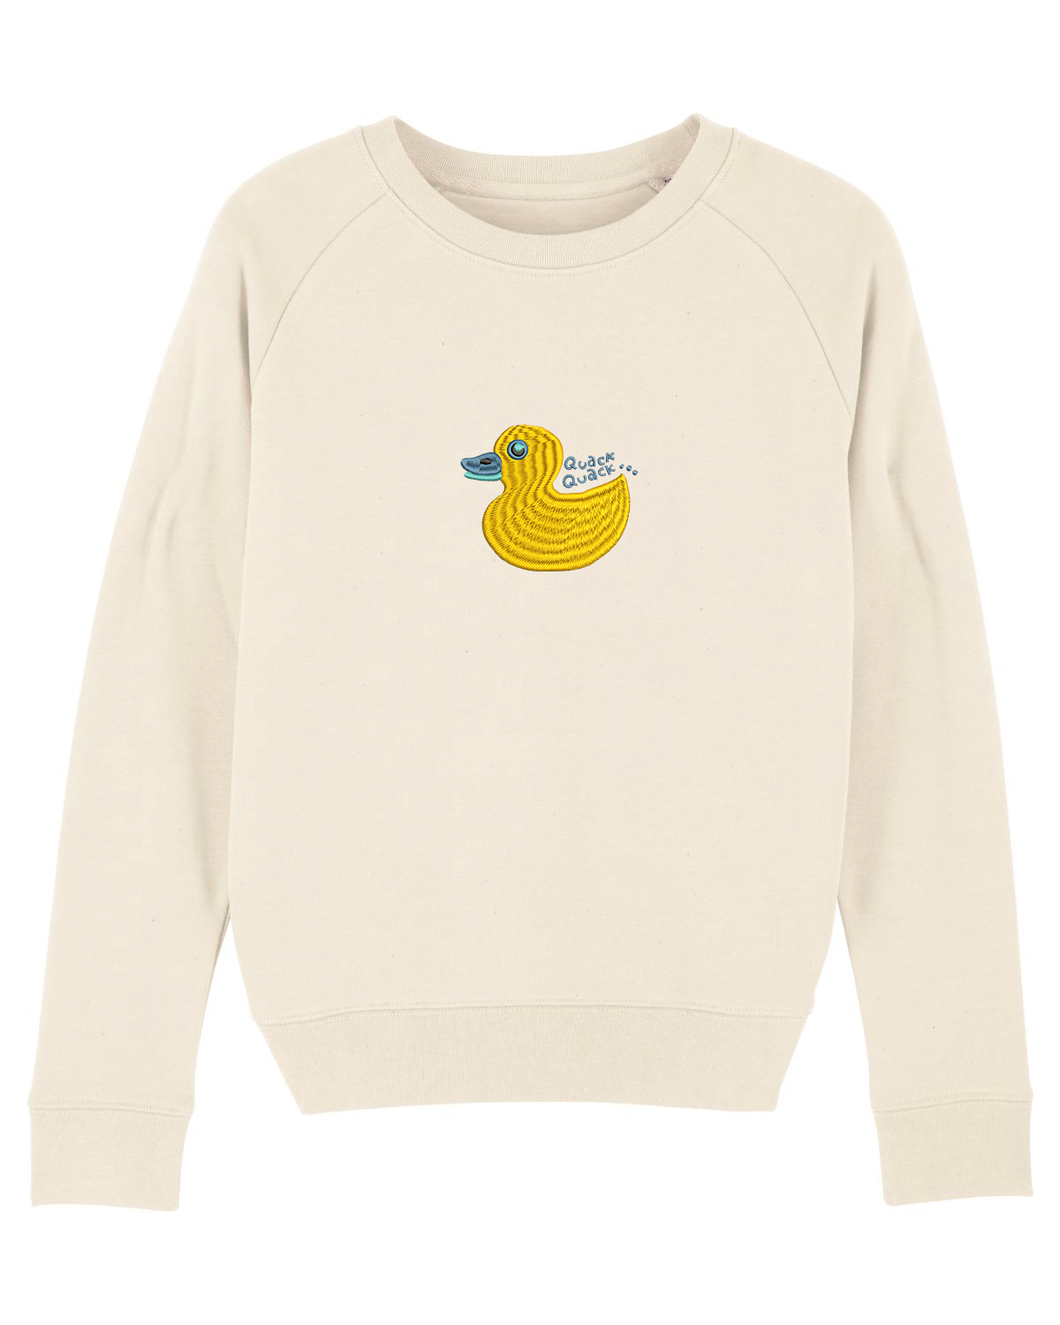 Quack, Quack 🦆- Embroidered women's sweatshirt-OUTLET🔴